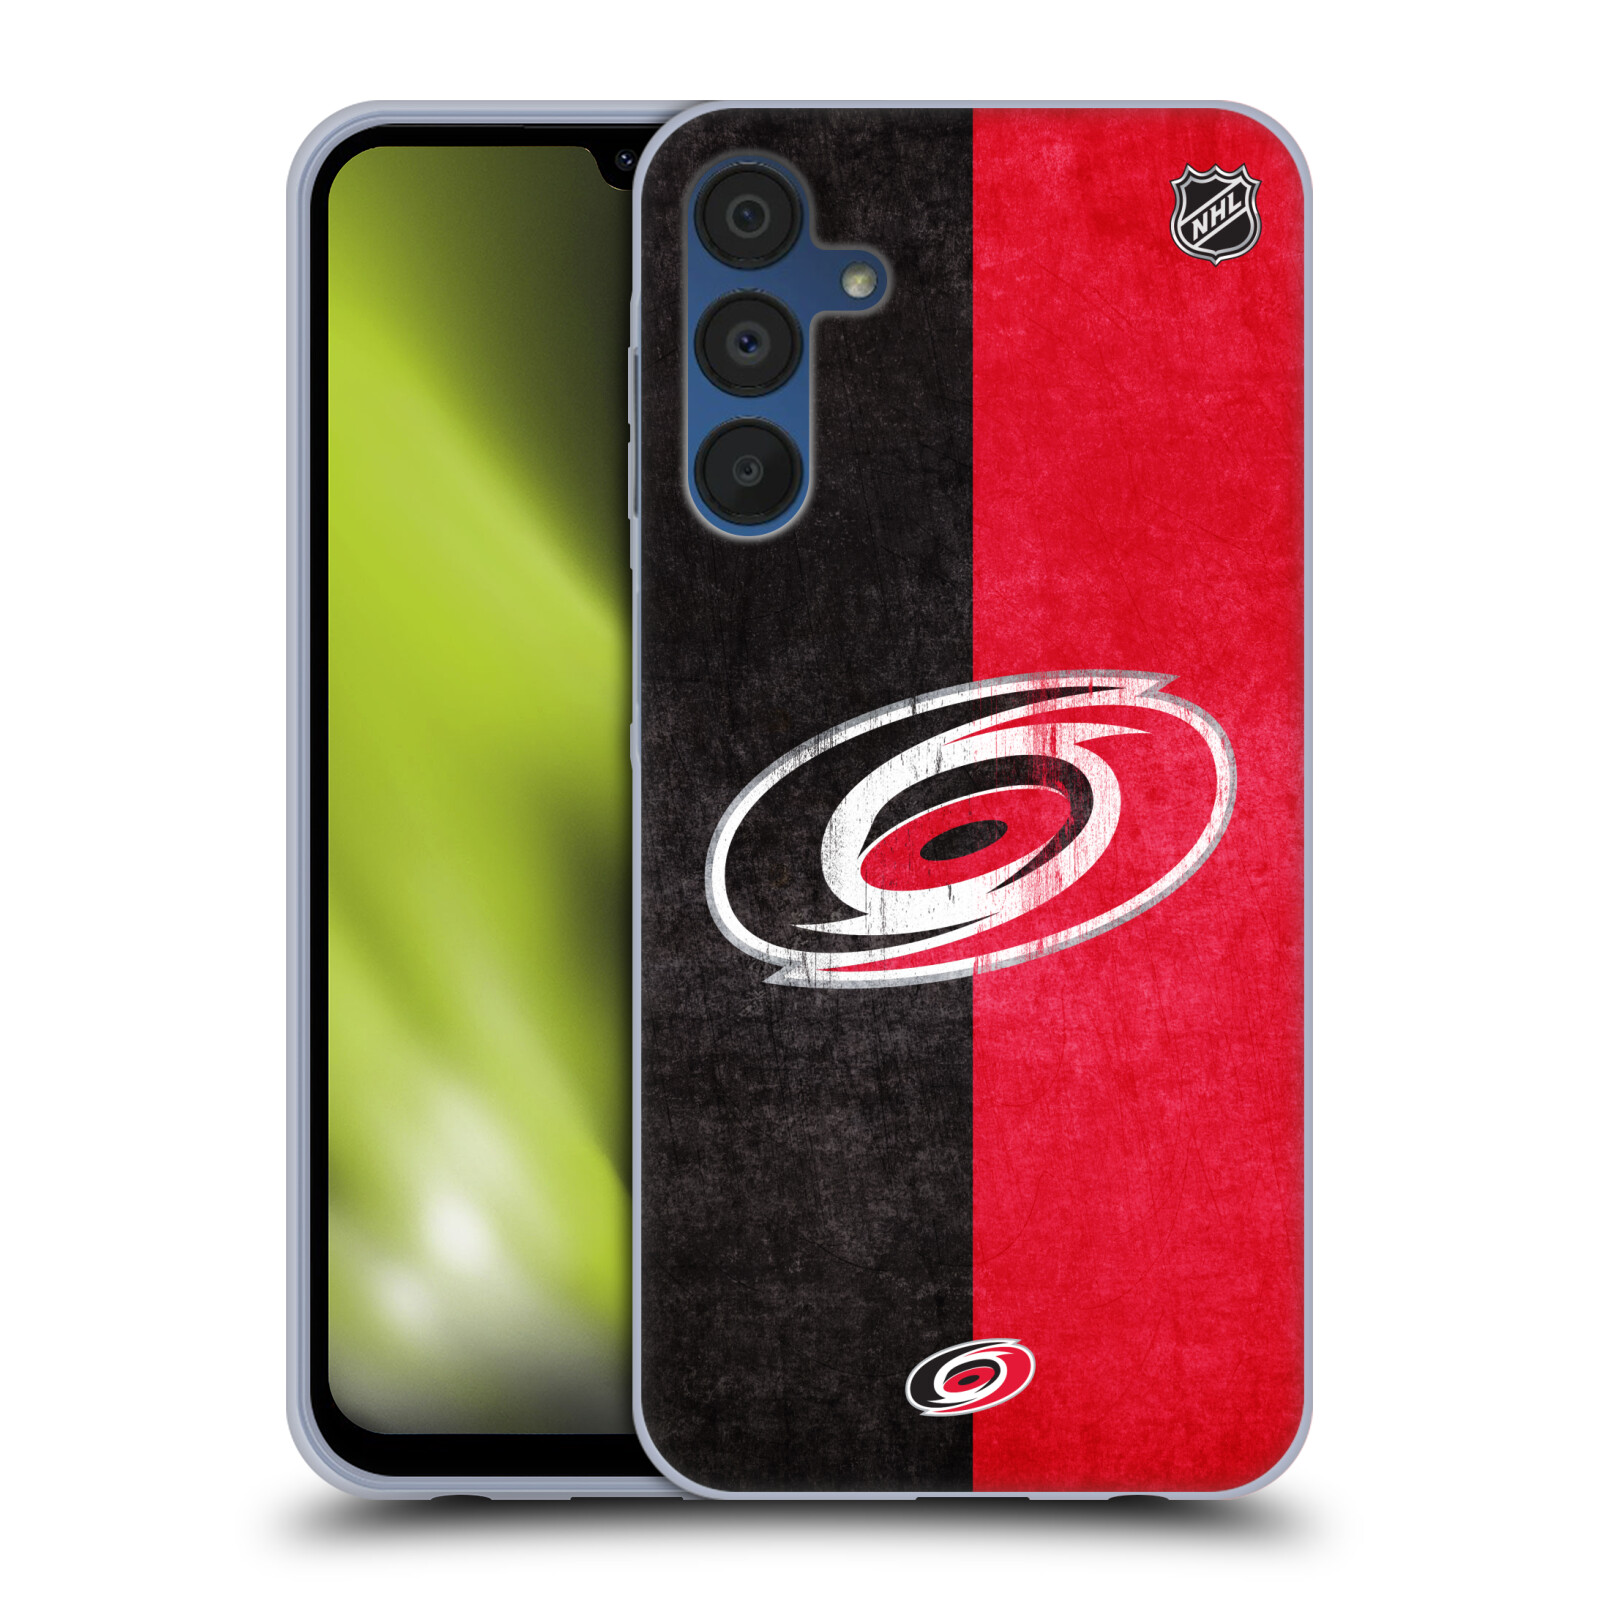 Silikonové pouzdro na mobil Samsung Galaxy A15 / A15 5G - NHL - Půlené logo Carolina Hurricanes (Silikonový kryt, obal, pouzdro na mobilní telefon Samsung Galaxy A15 / A15 5G s licencovaným motivem NHL - Půlené logo Carolina Hurricanes)